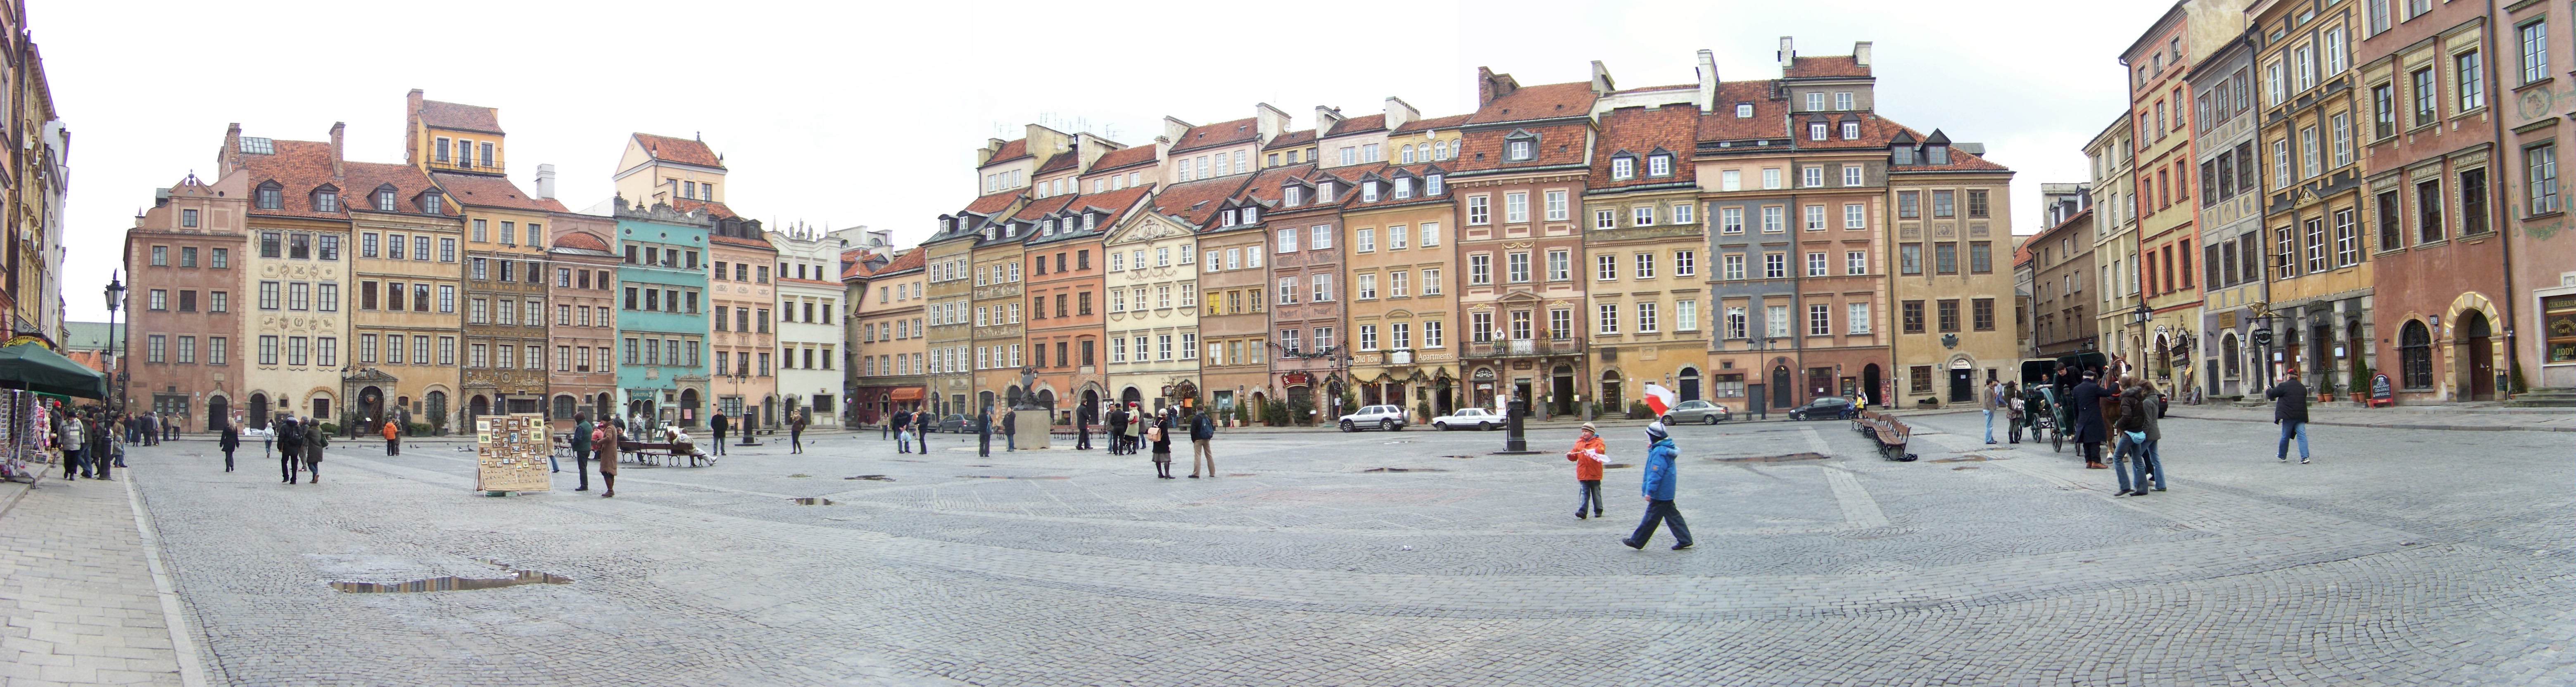 cityscapes, architecture, buildings, Poland, oldtown, cities - desktop wallpaper